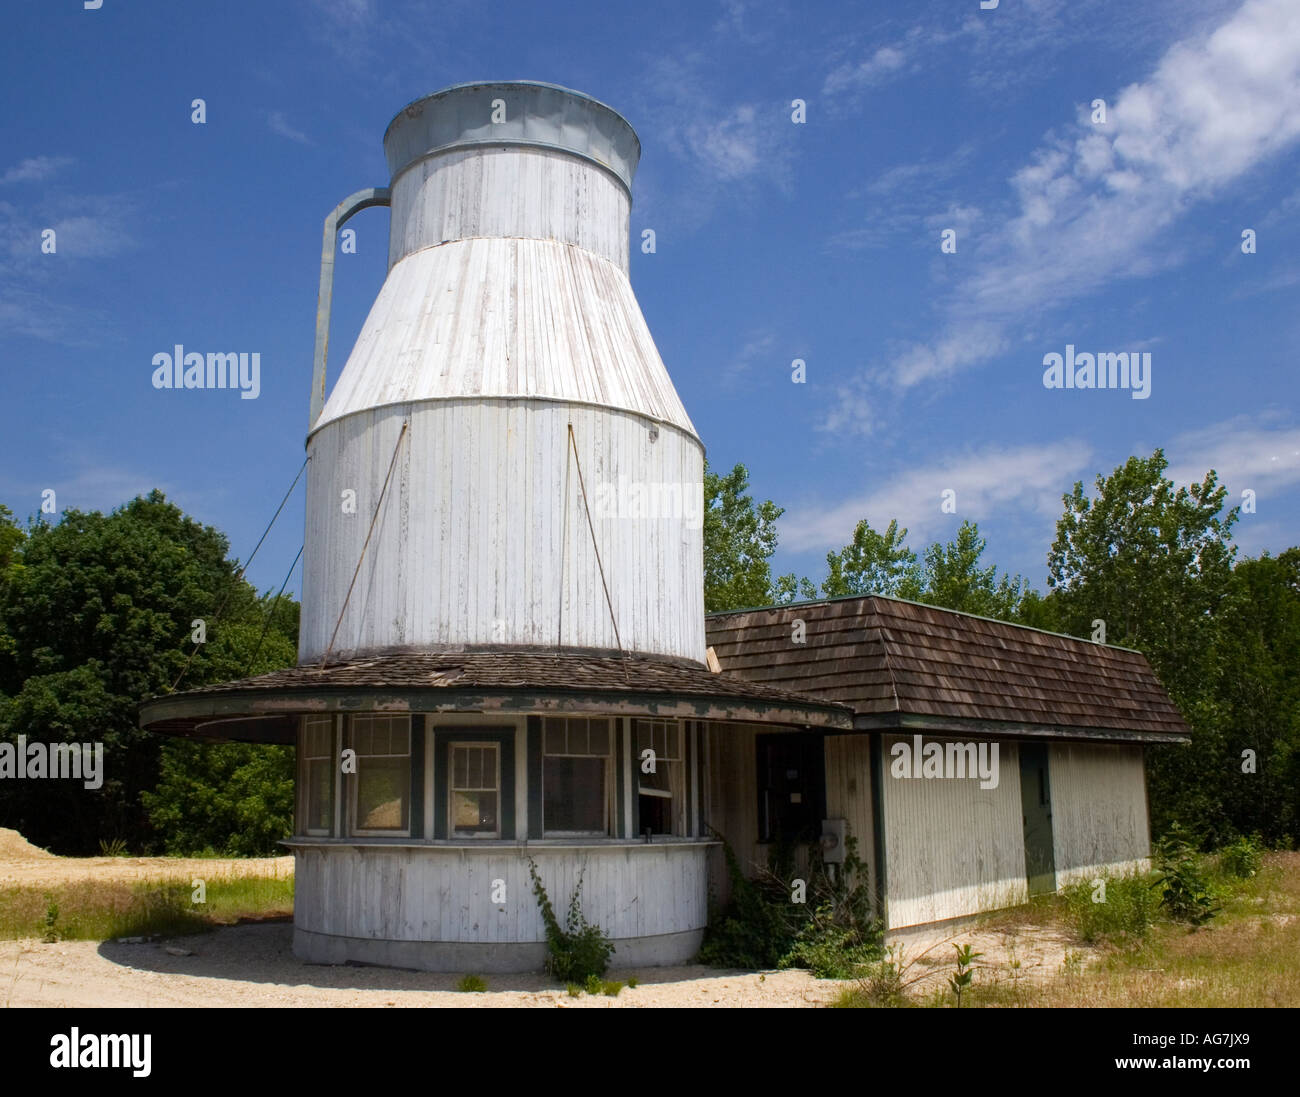 Old abandoned Milk Bottle shaped building in Woonsocket Rhode Island Stock Photo